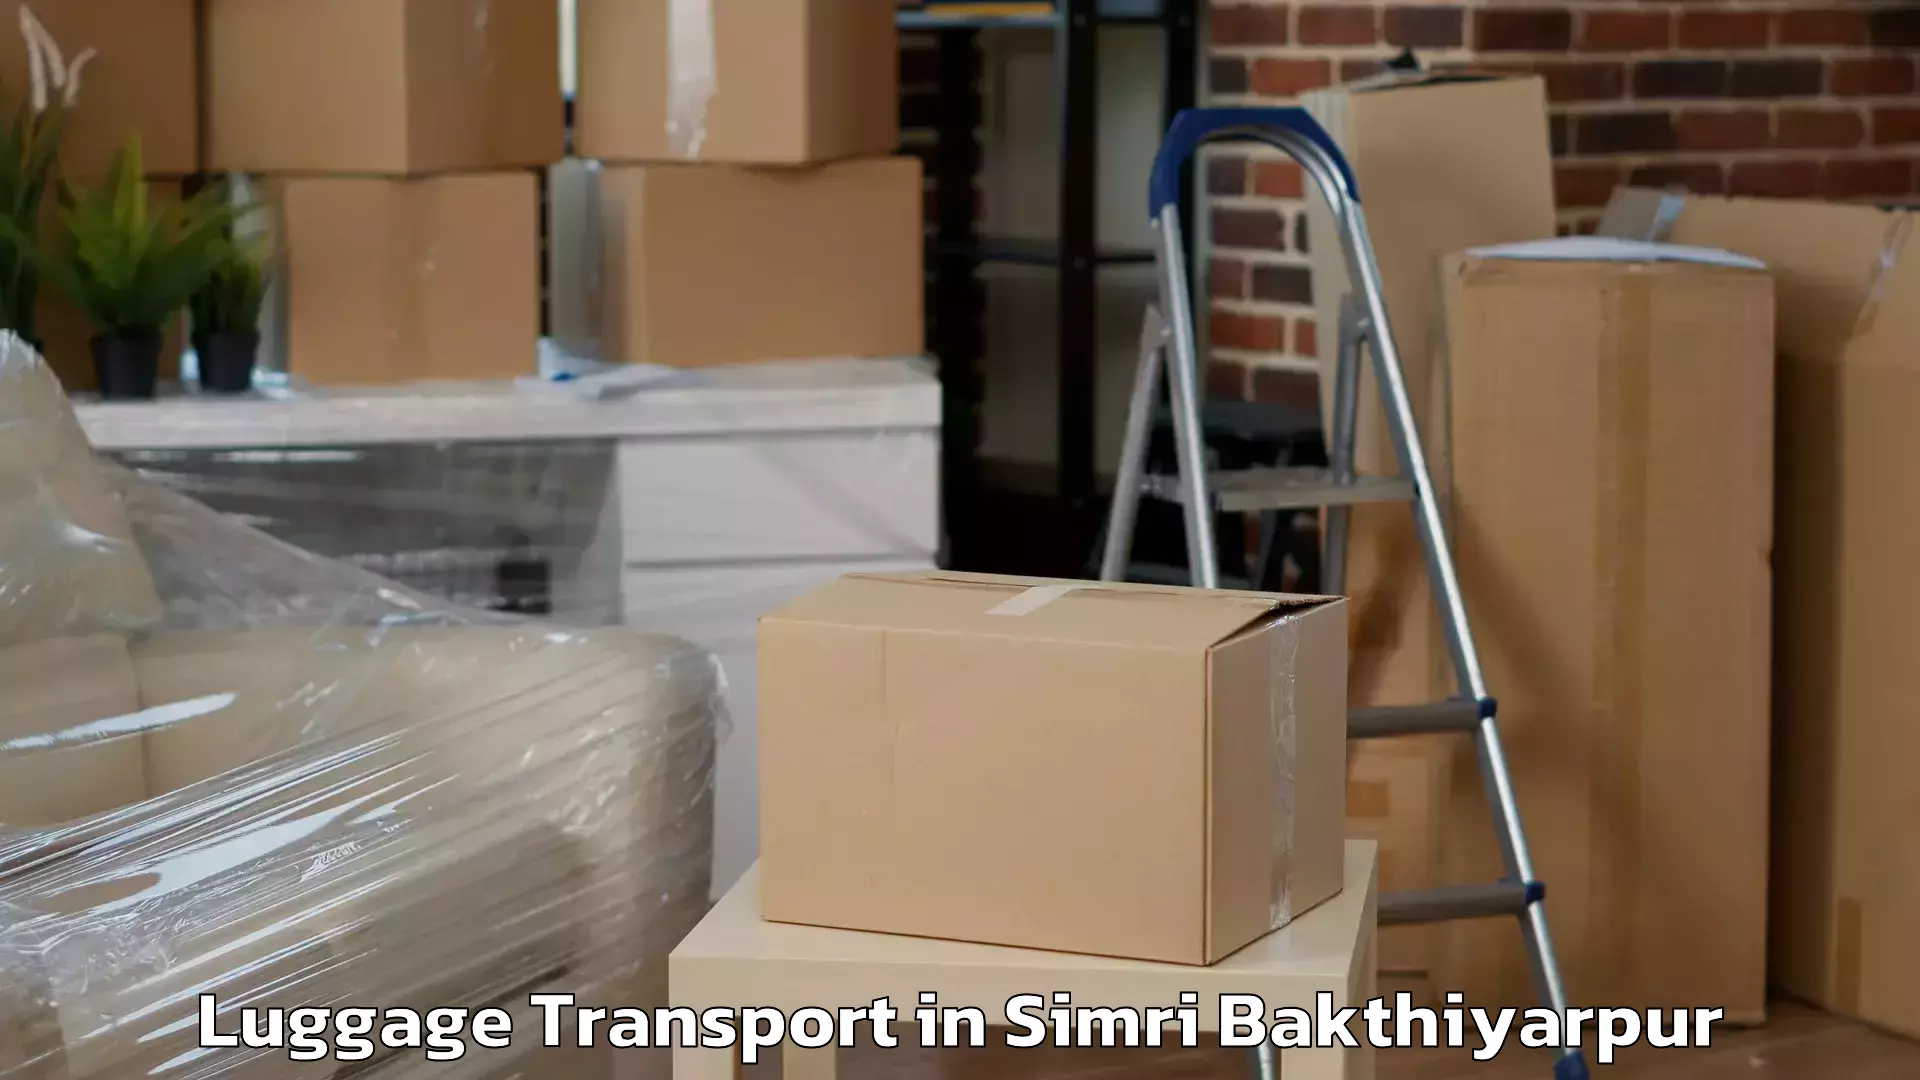 High-quality baggage shipment in Simri Bakthiyarpur